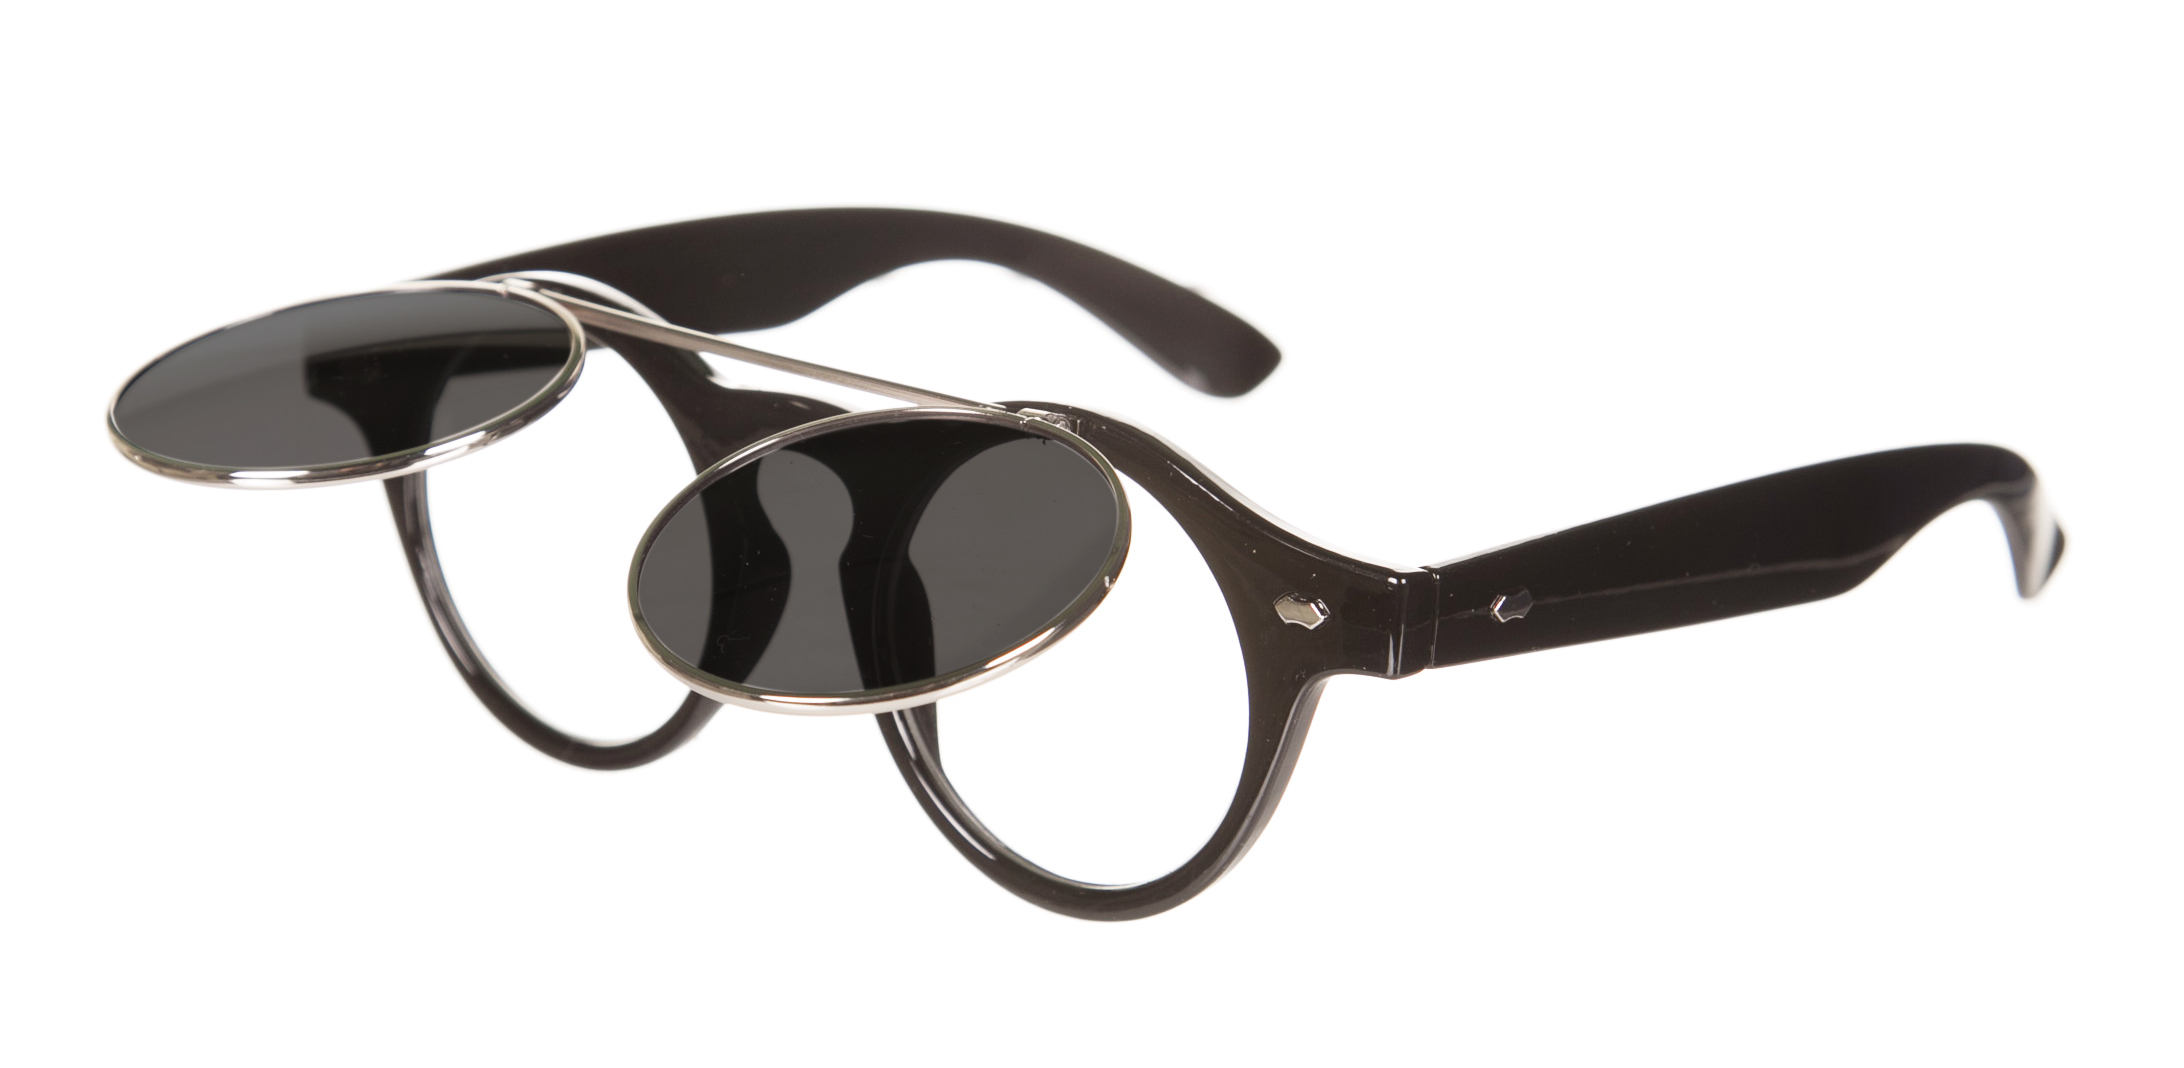 Chelsea Doll Retro Black Round Flipster Sunglasses from